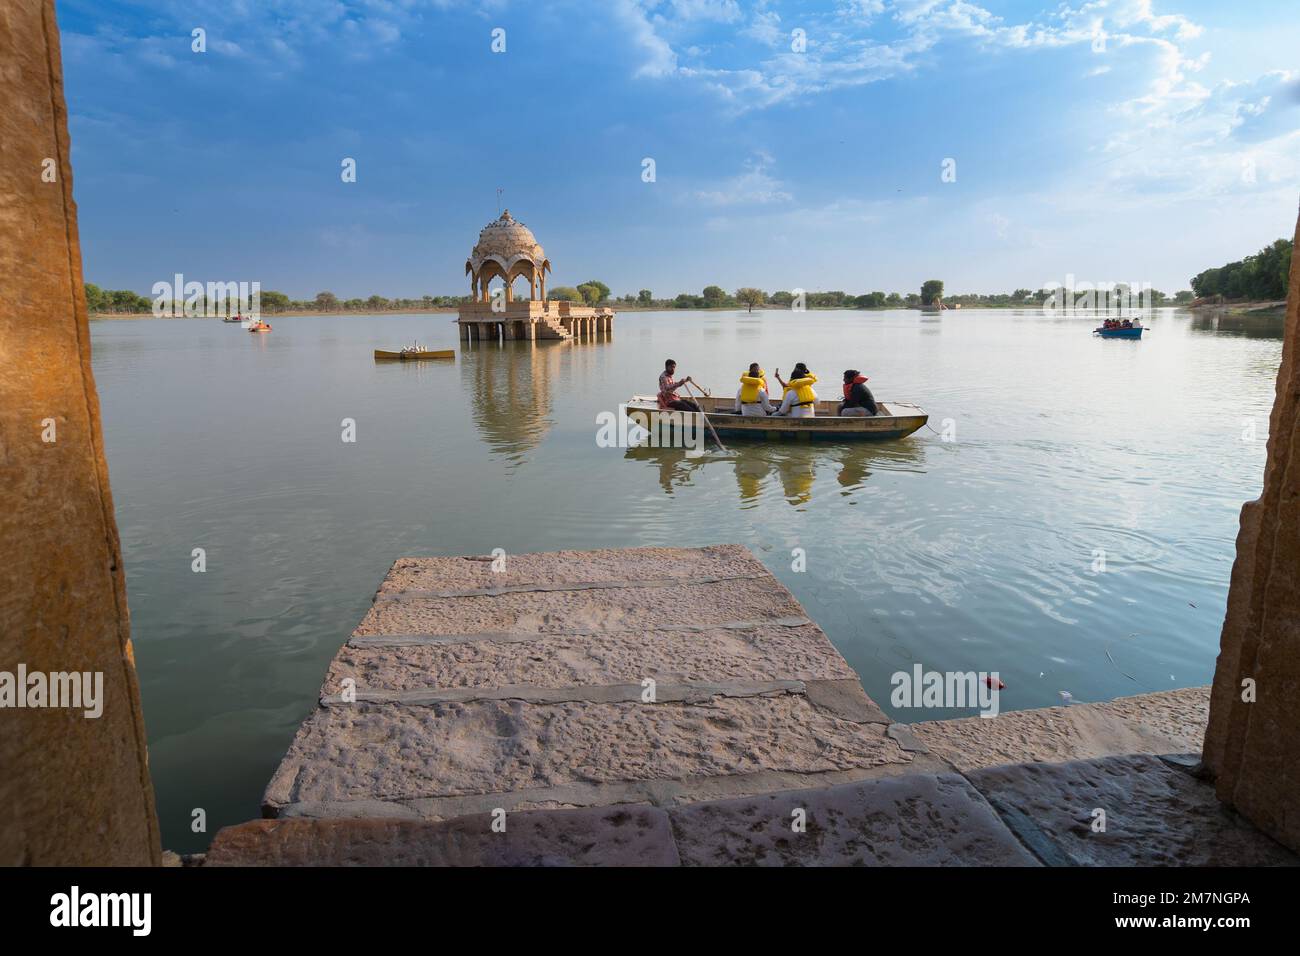 Gadisar, Jaisalmer, Rajasthan - 14th October 2019 : Tourists boating on Gadisar or Gadaria lake, built by founder of Jaisalmer, King Rawal Jaisal. Stock Photo